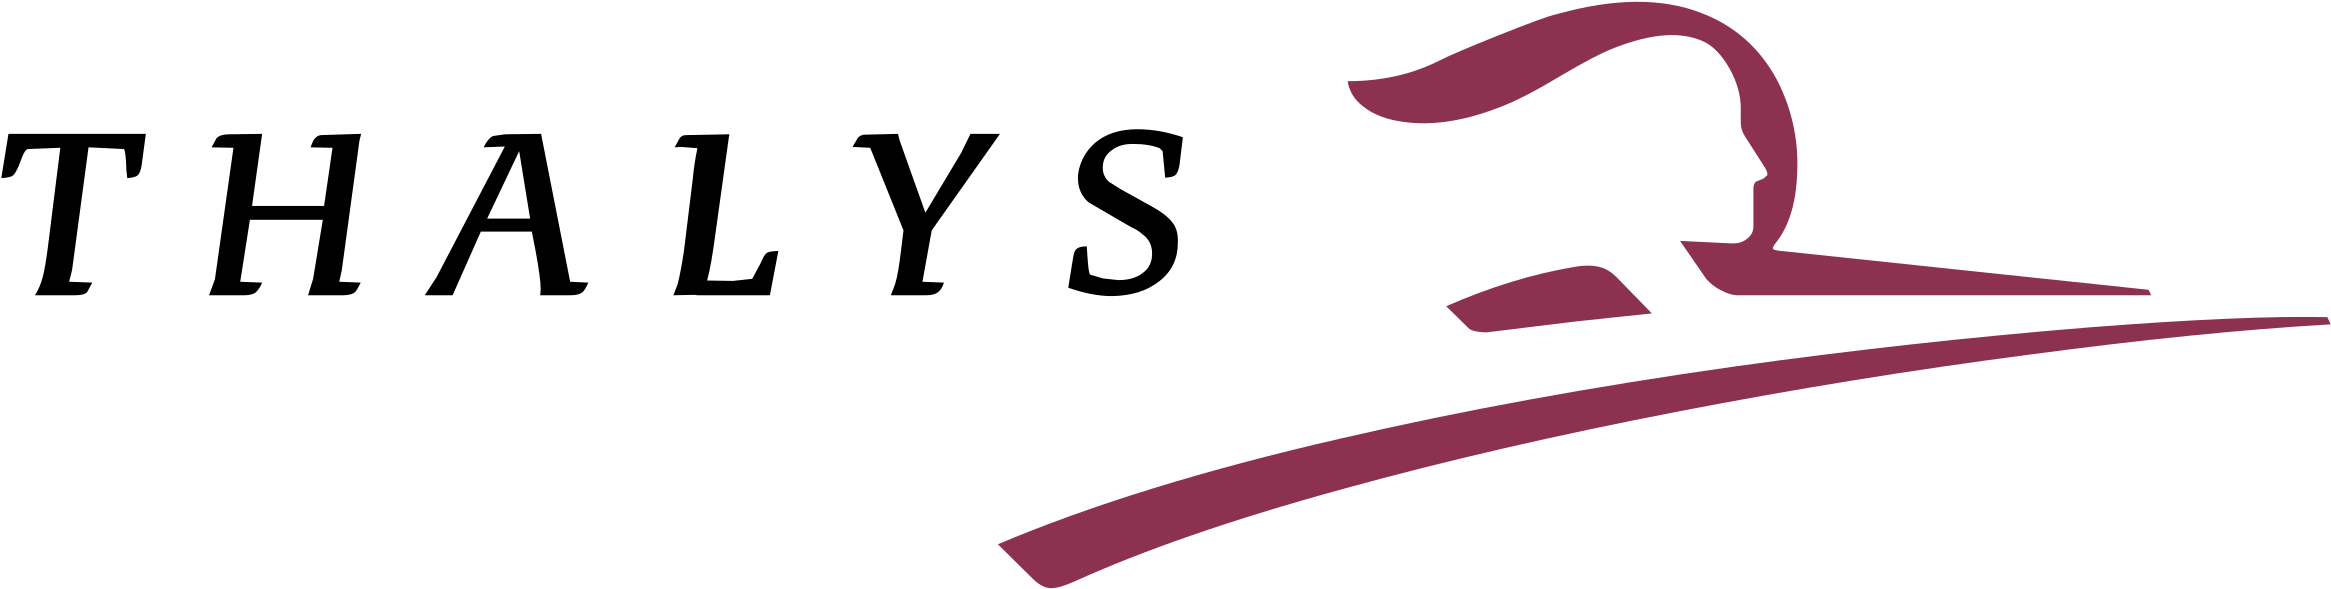 Thalys-logo